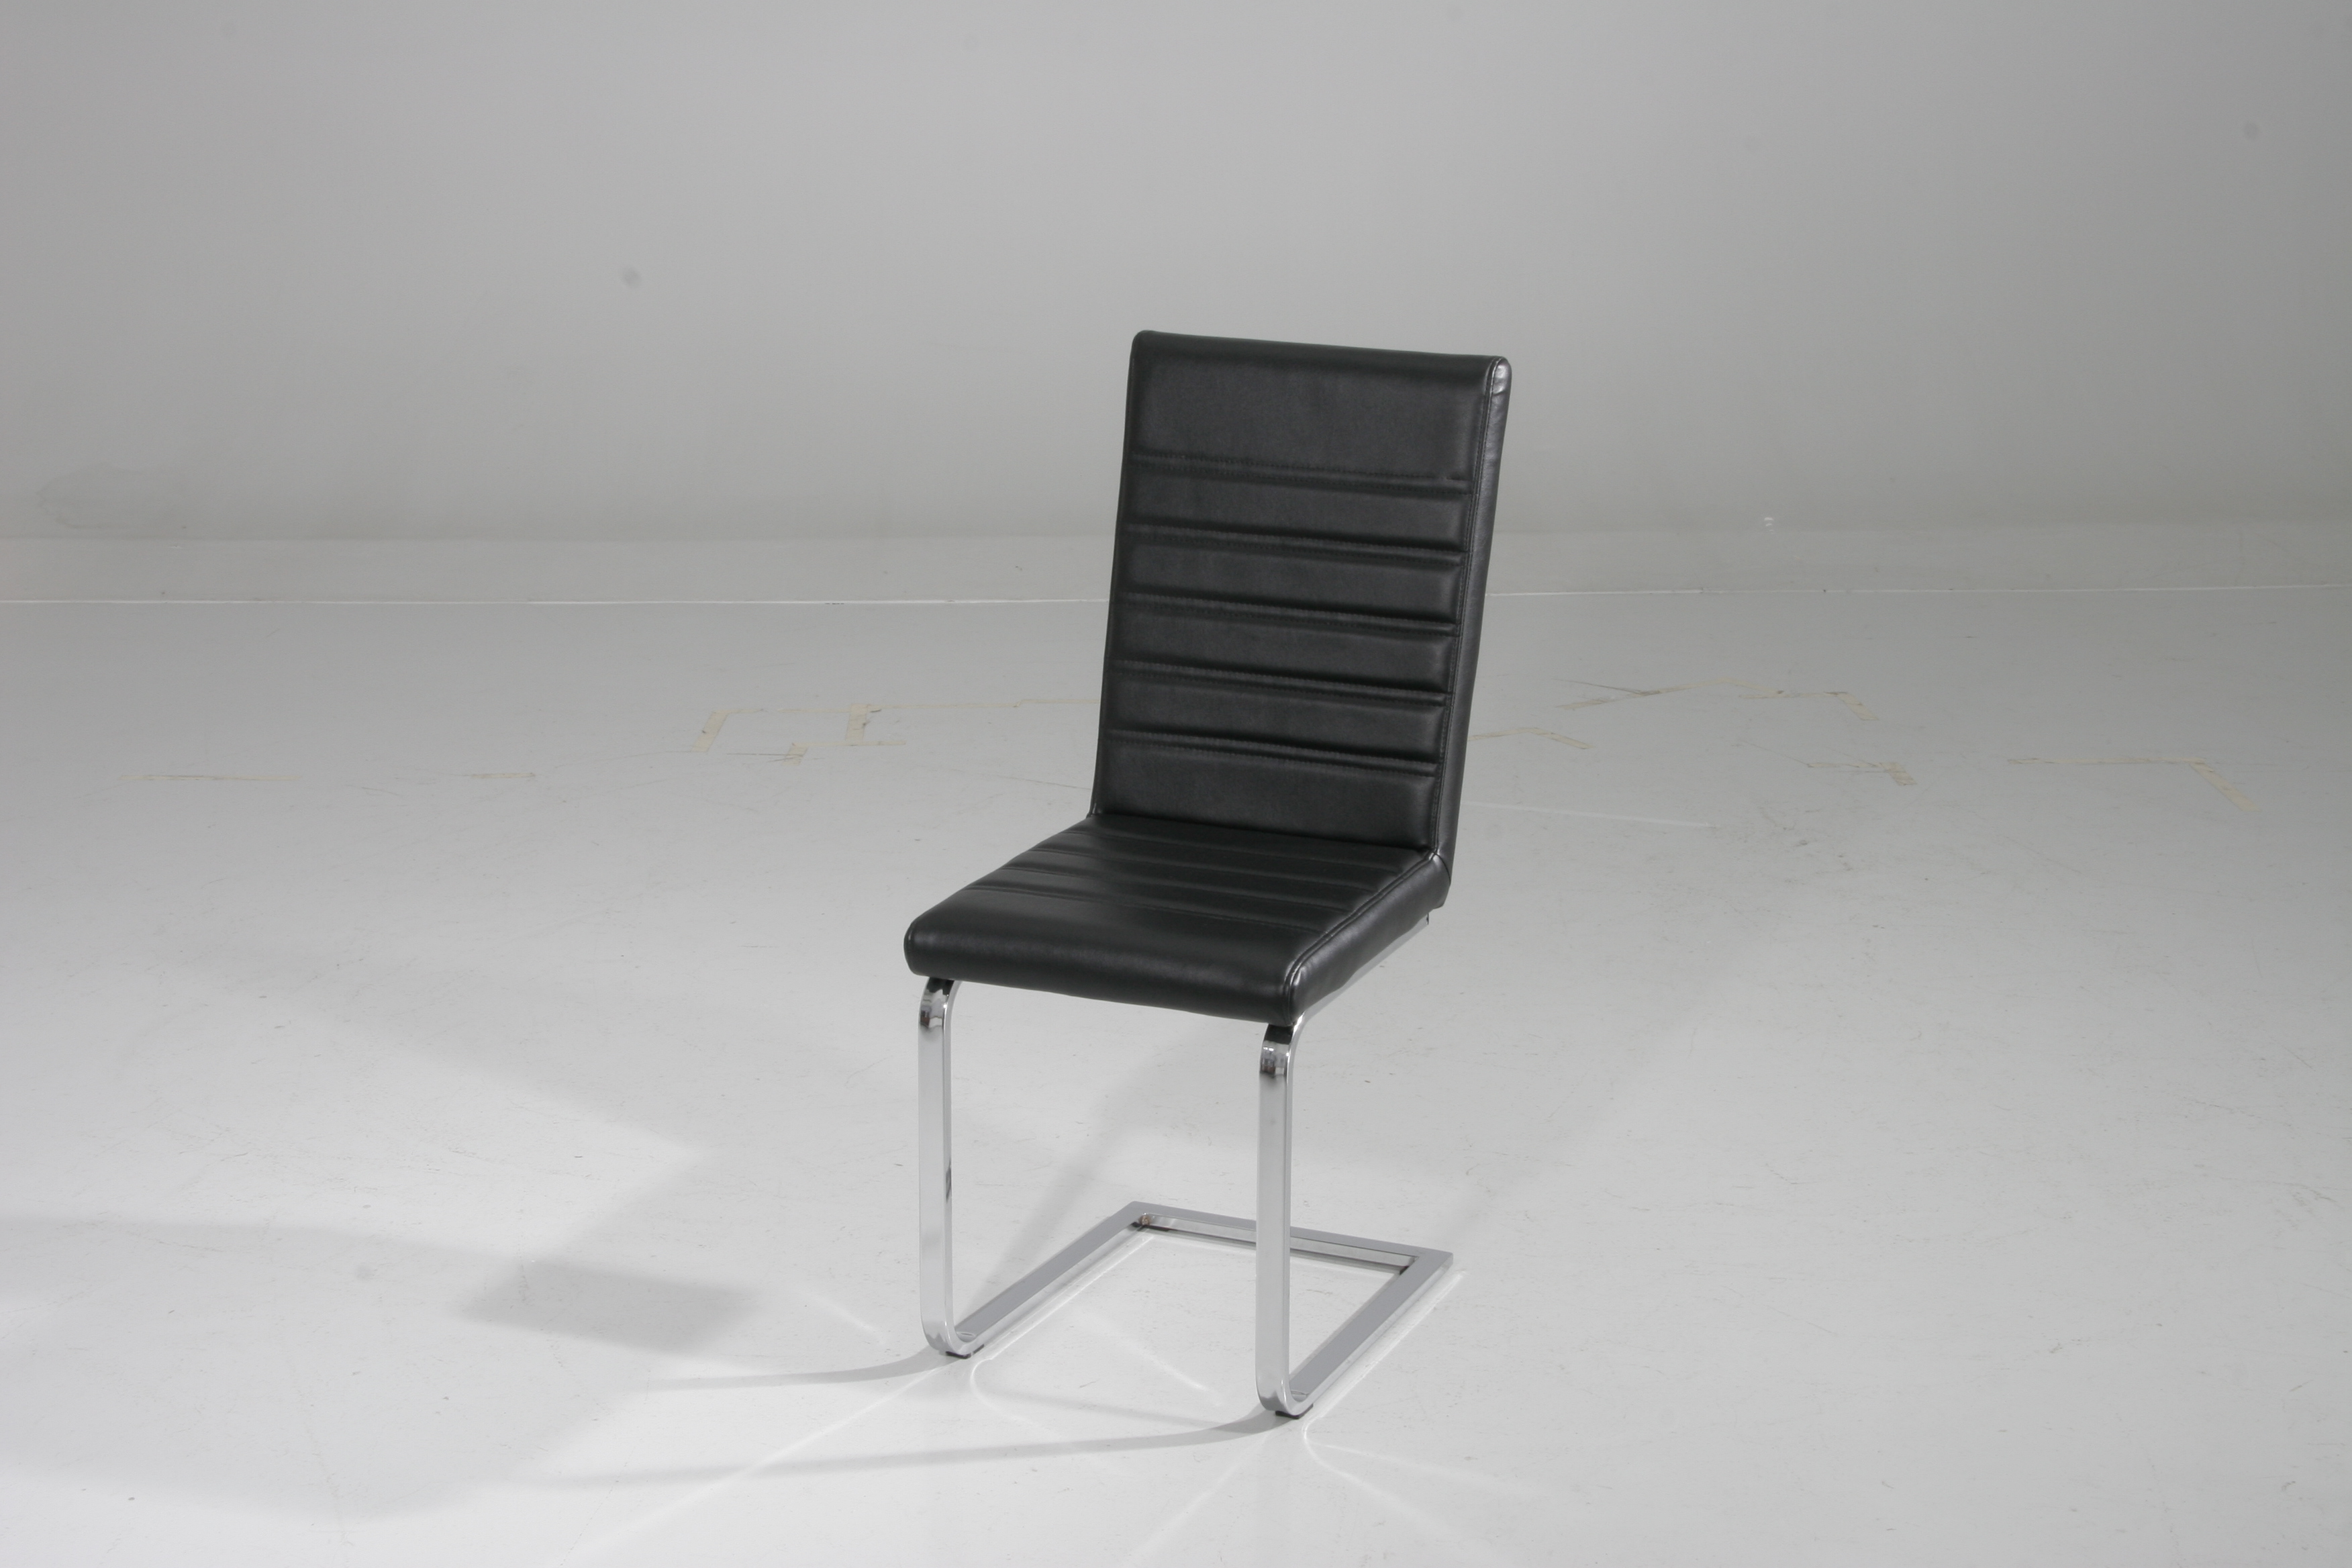 Jídelní židle OLYMP  <span class="discount"><span style="color: red;"> SLEVA 40%</span></span>